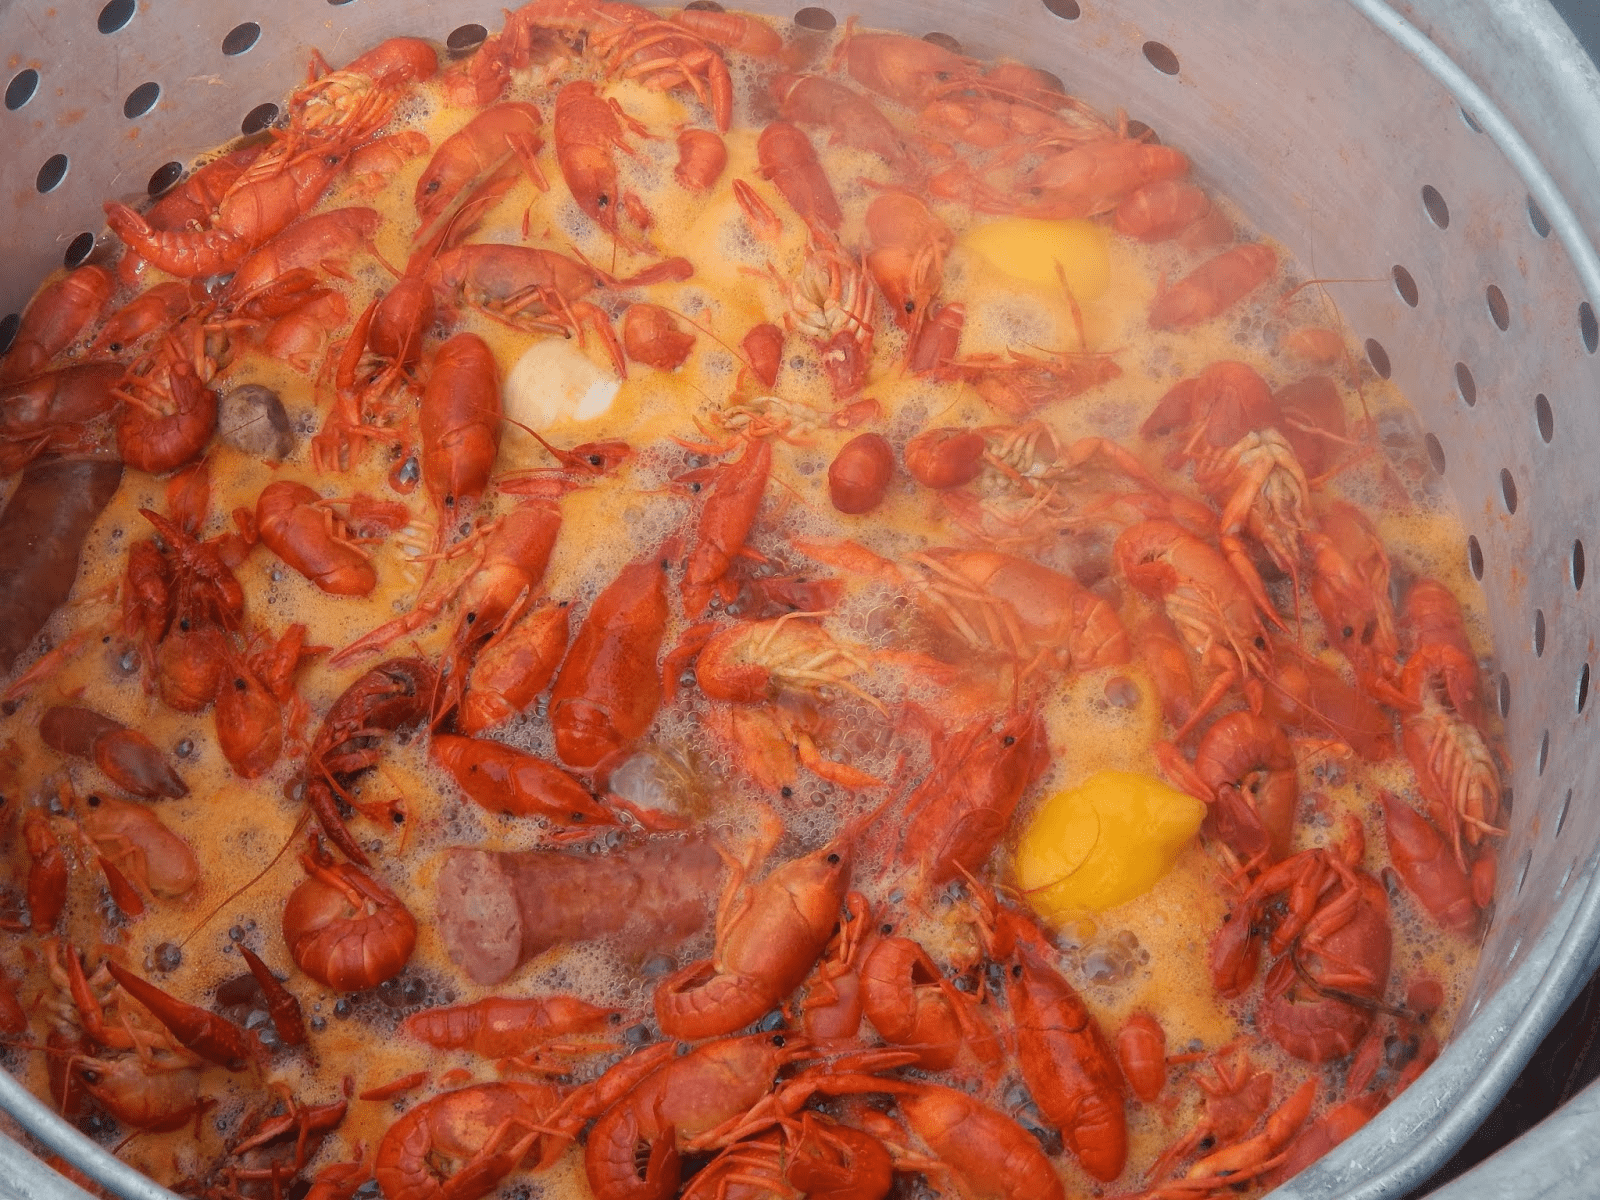 Louisiana Crawfish Boil - This Ole Mom